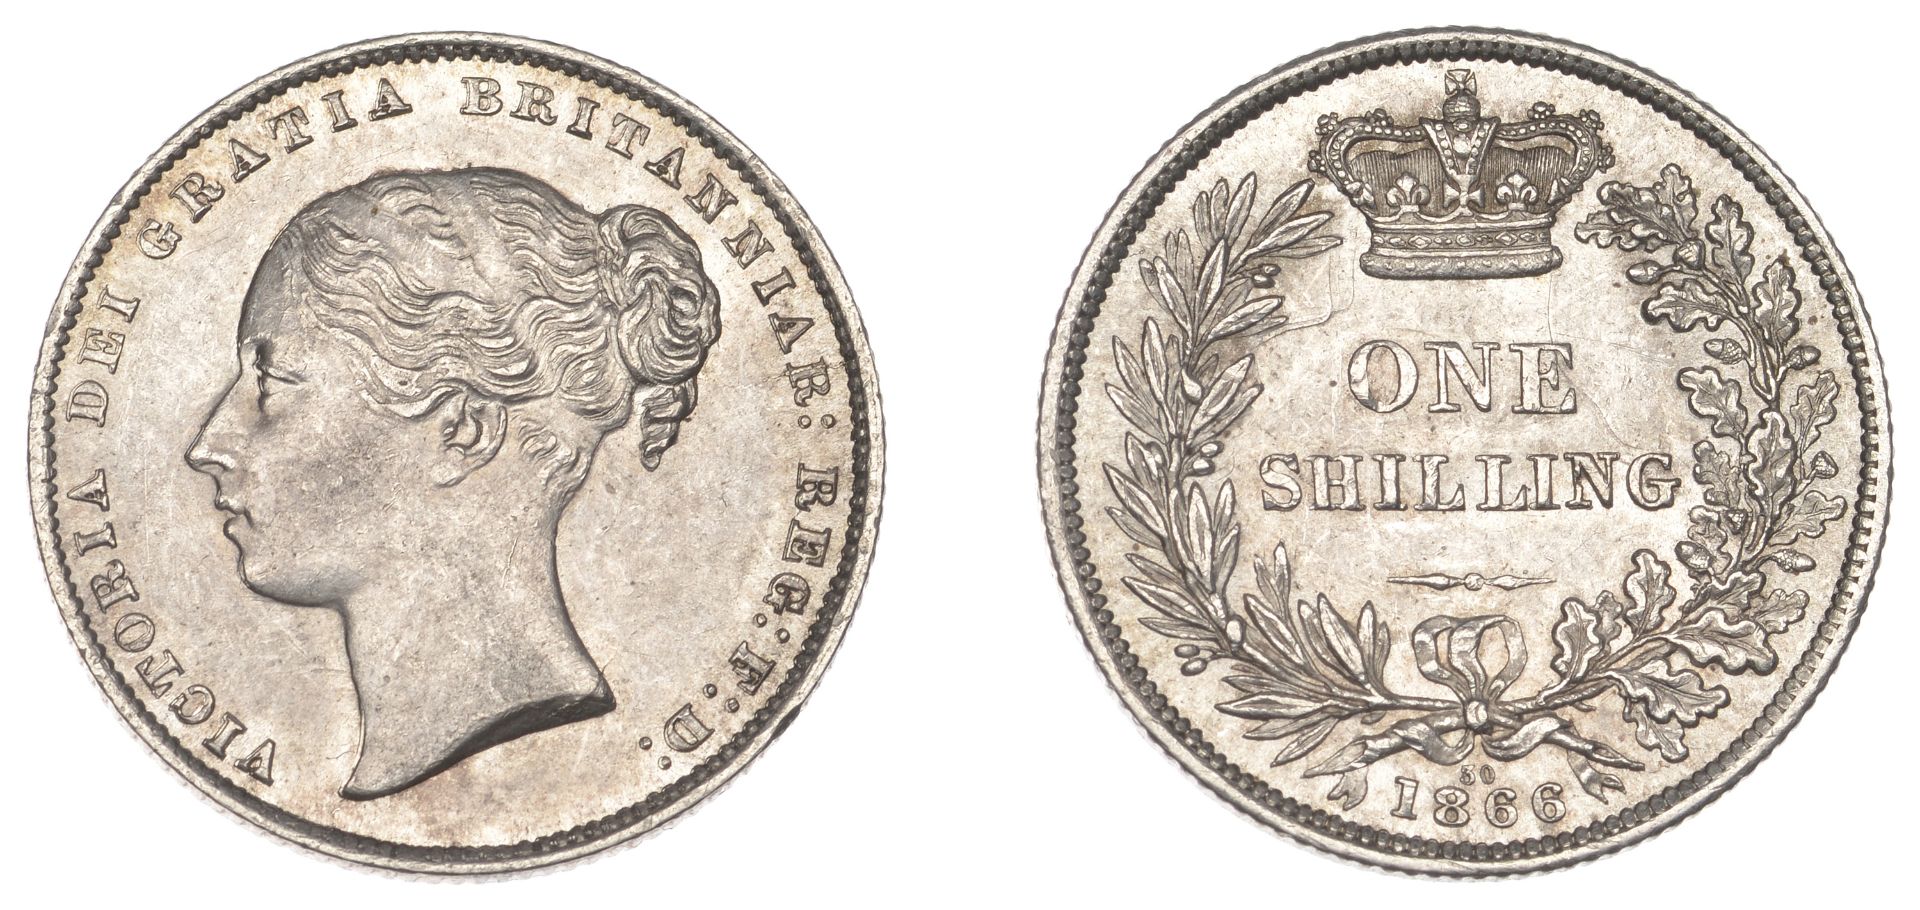 Victoria (1837-1901), Shilling, 1866, die 30 (ESC 3027; S 3905). Extremely fine Â£120-Â£150